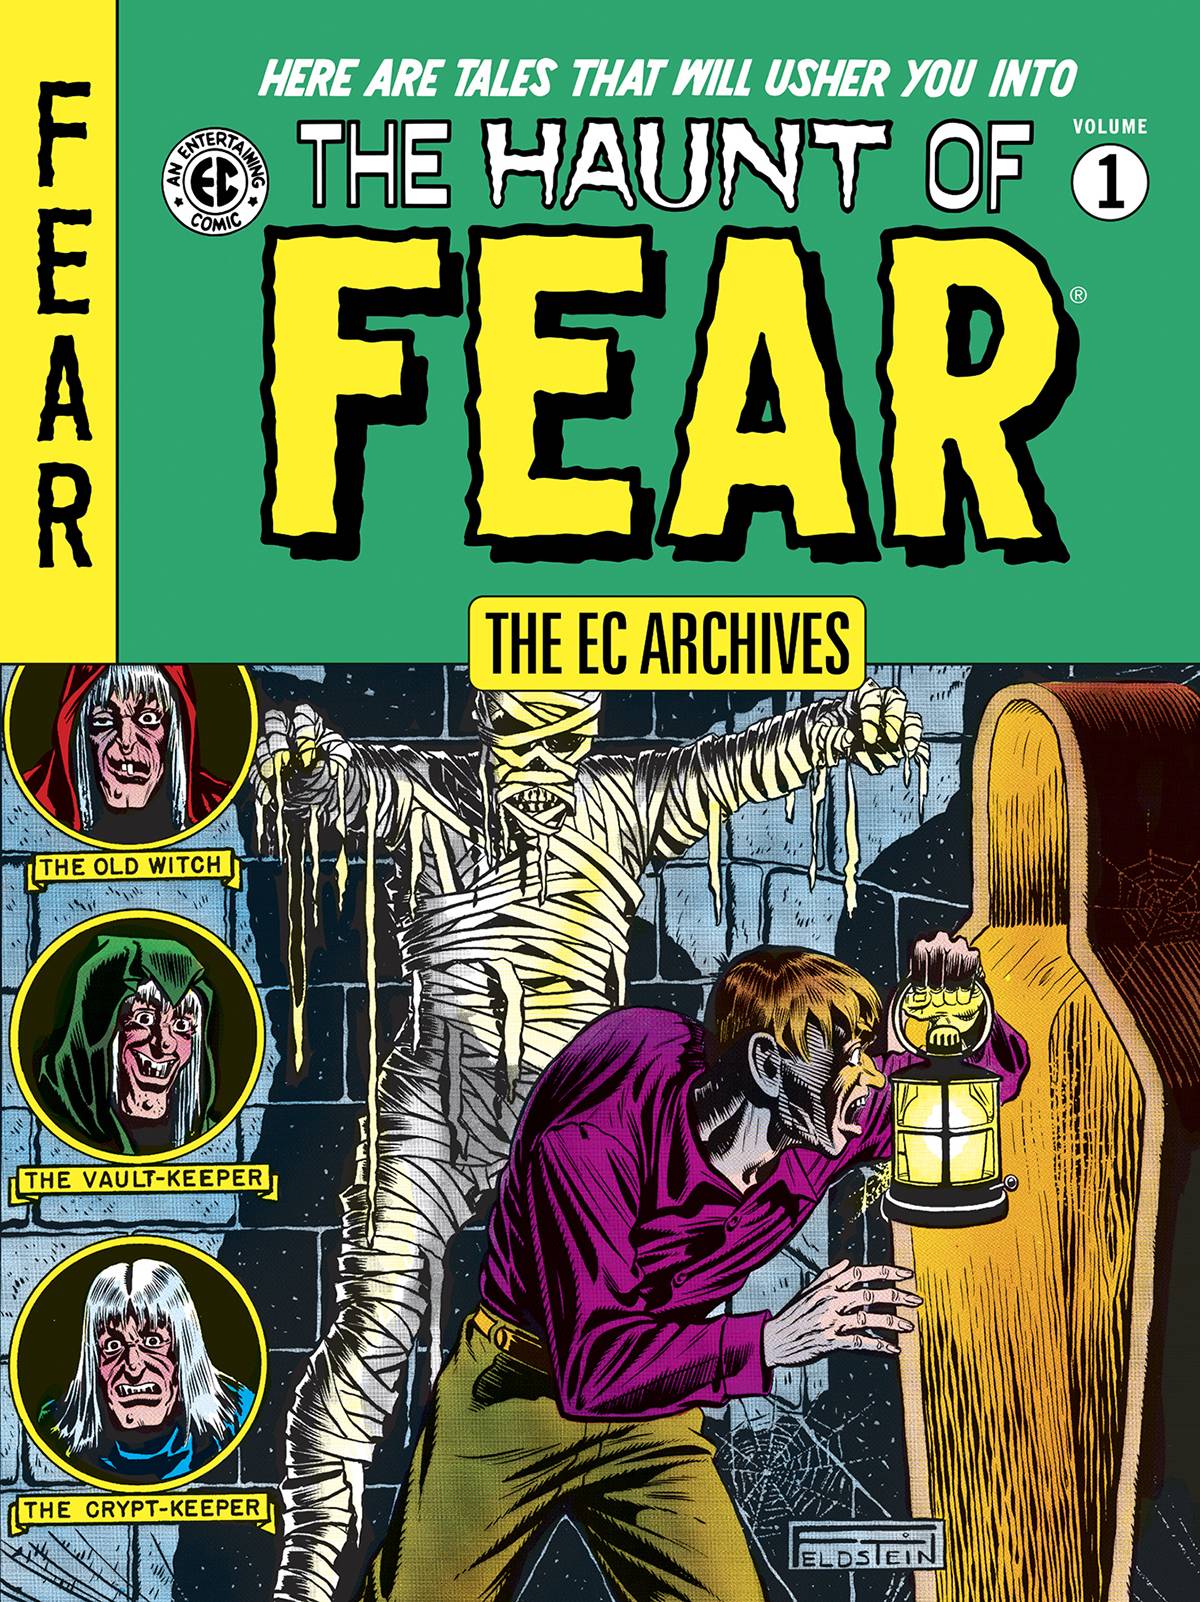 EC Archives: The Haunt Of Fear vol 1 s/c